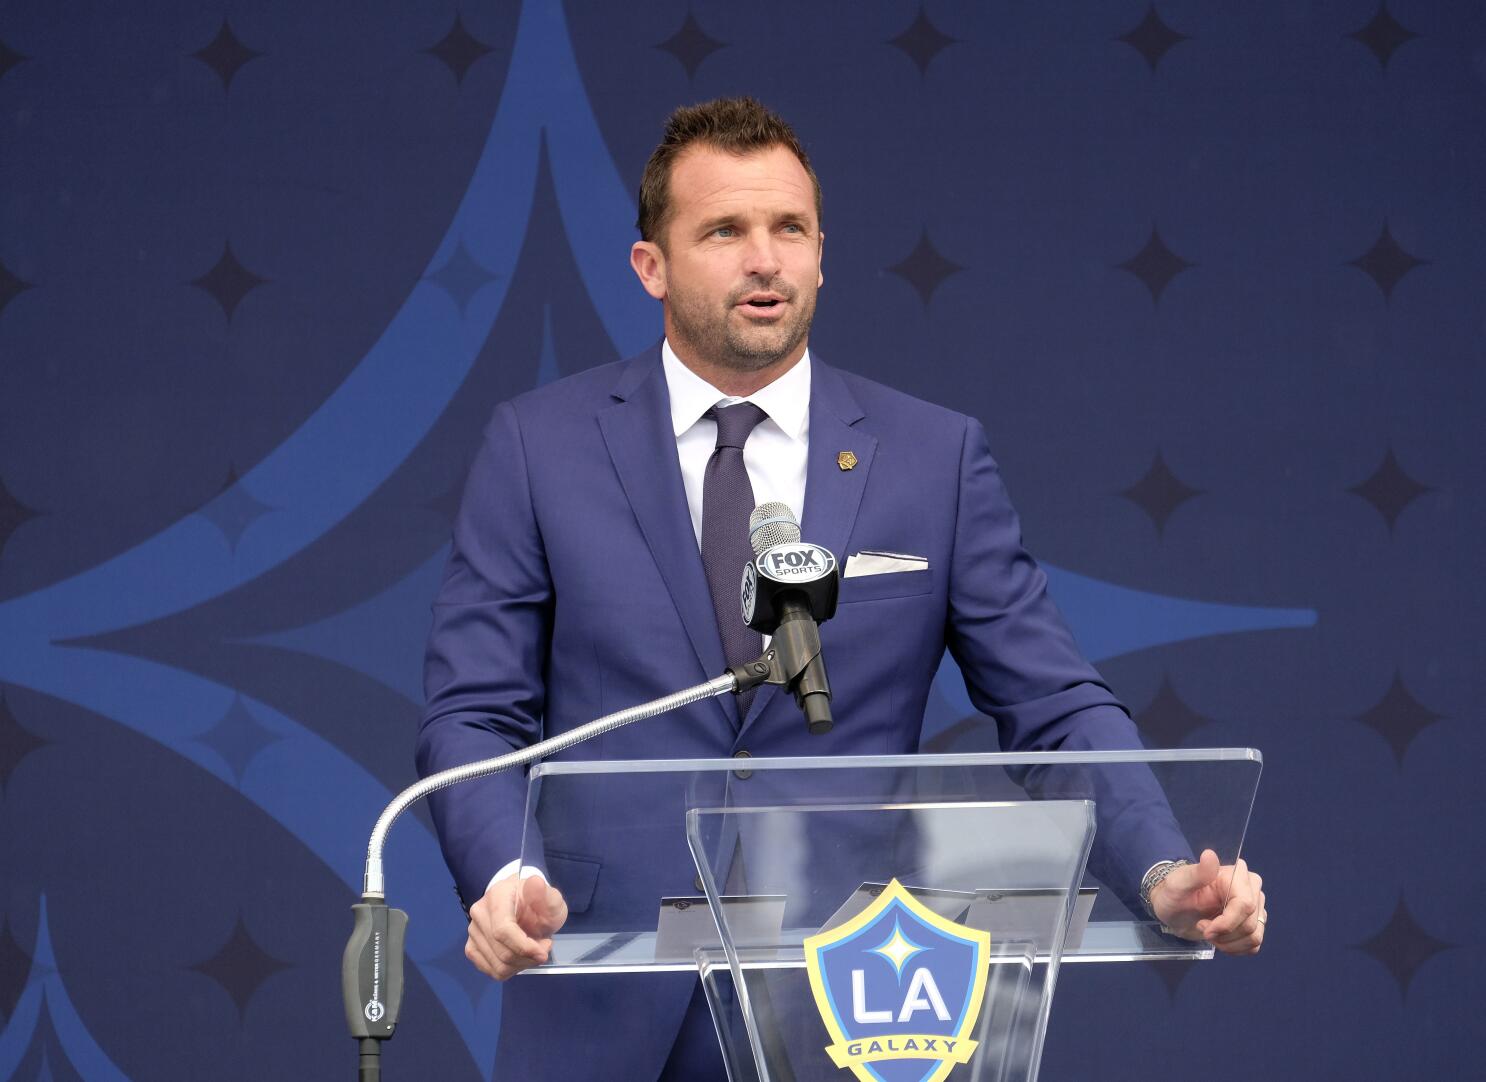 Chris Klein named Senior Director of the LA Galaxy Academy Program